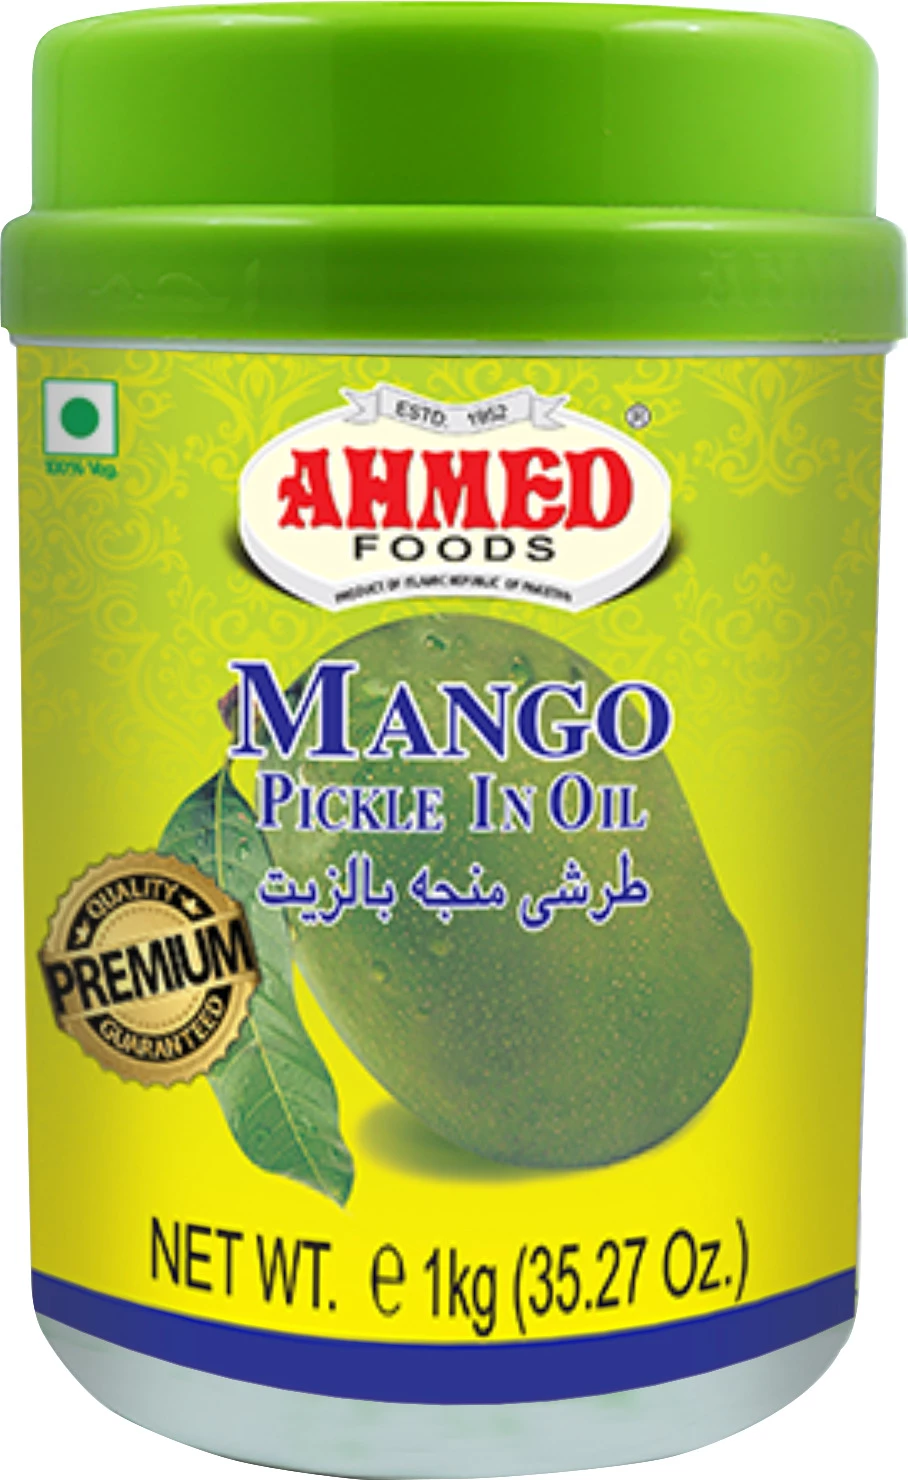 Mango Sott'olio 6 X 1 Kg - Ahmed